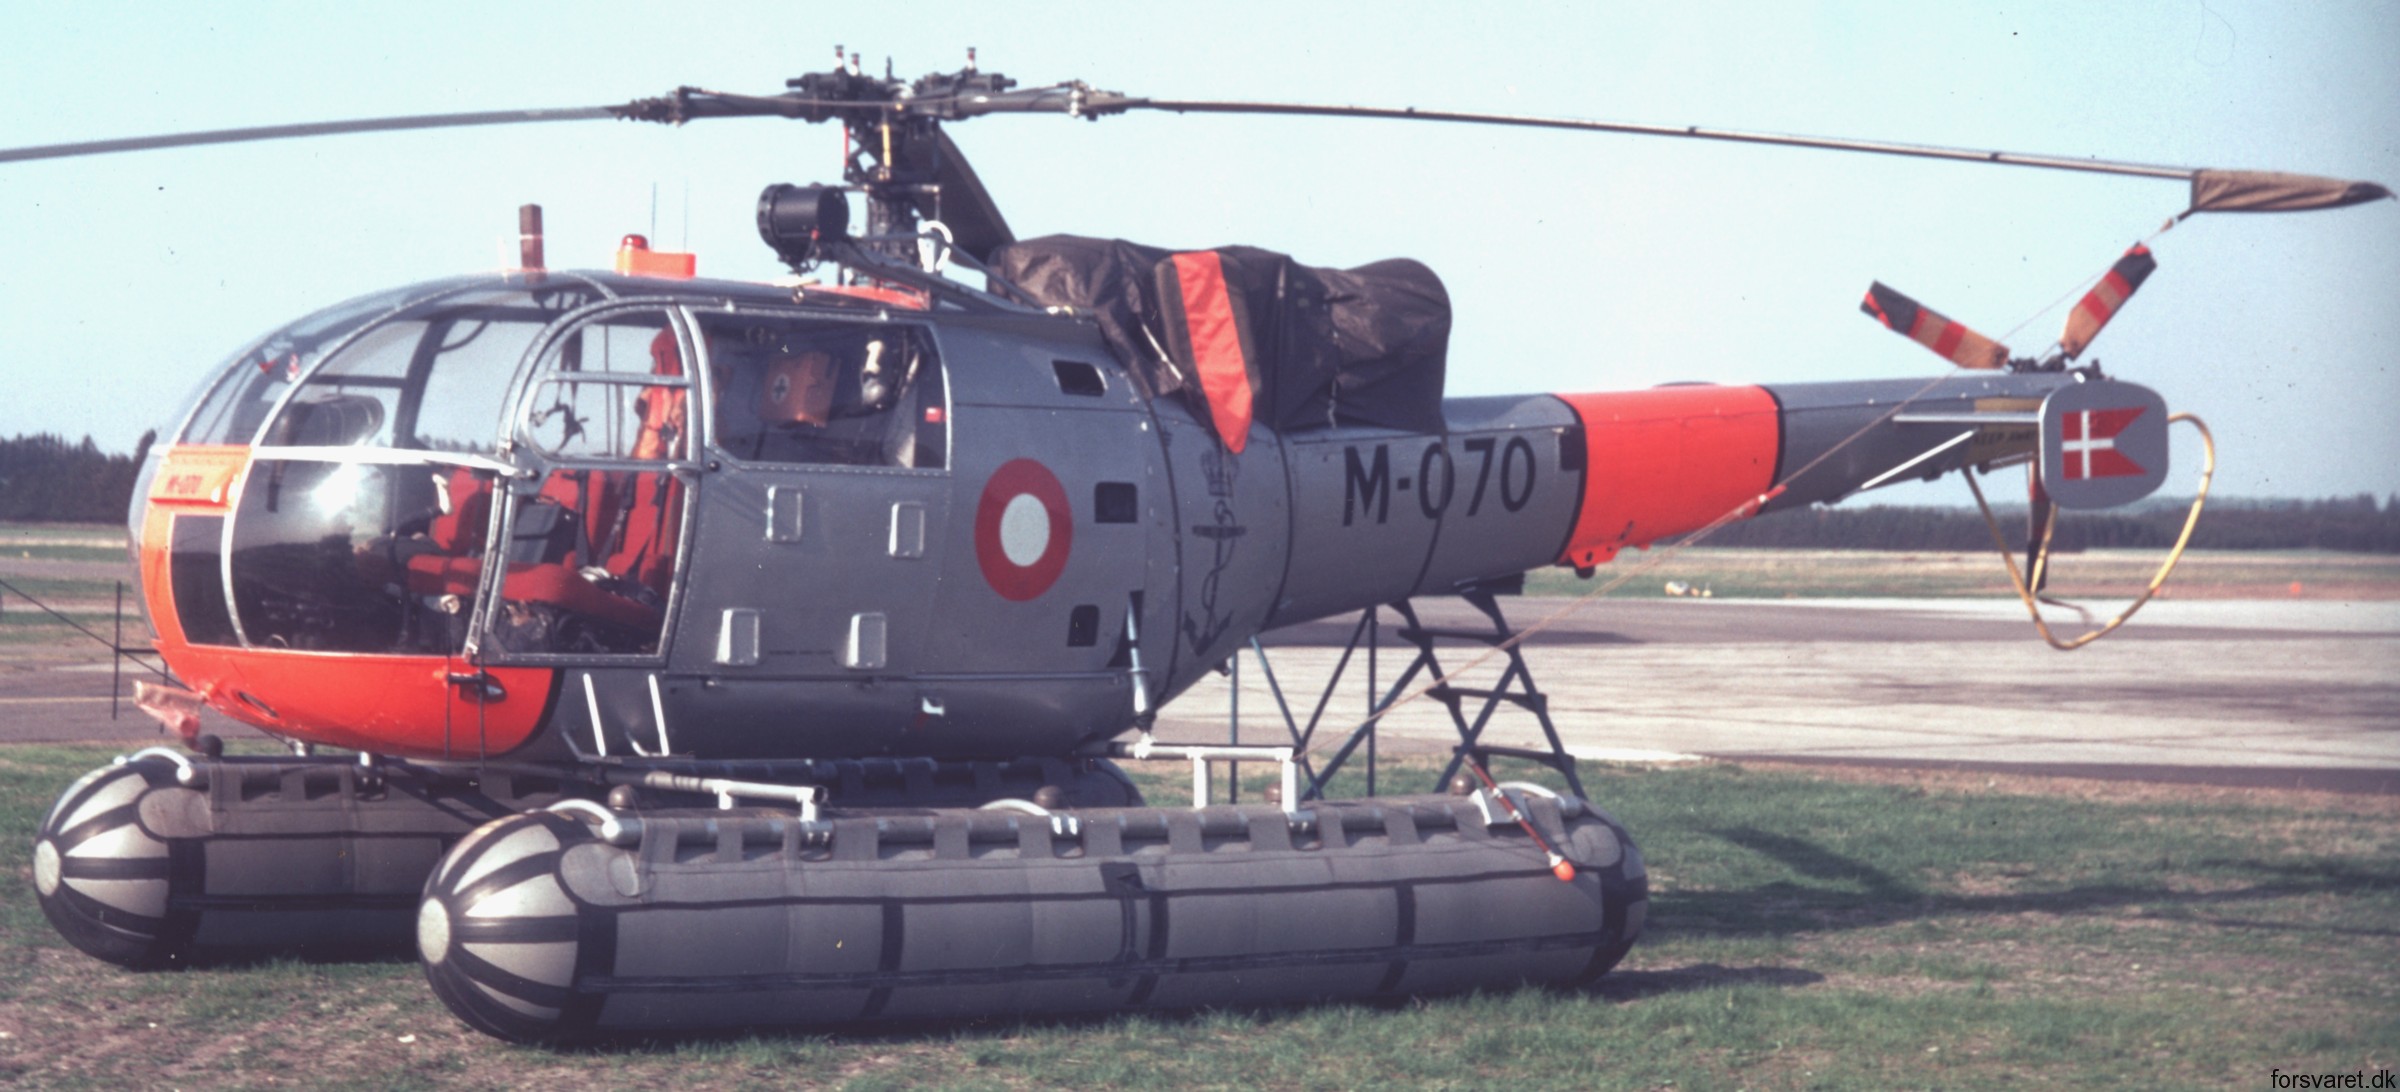 sa 316b alouette iii helicopter royal danish navy søværnet kongelige danske marine sud aviation m-070 03